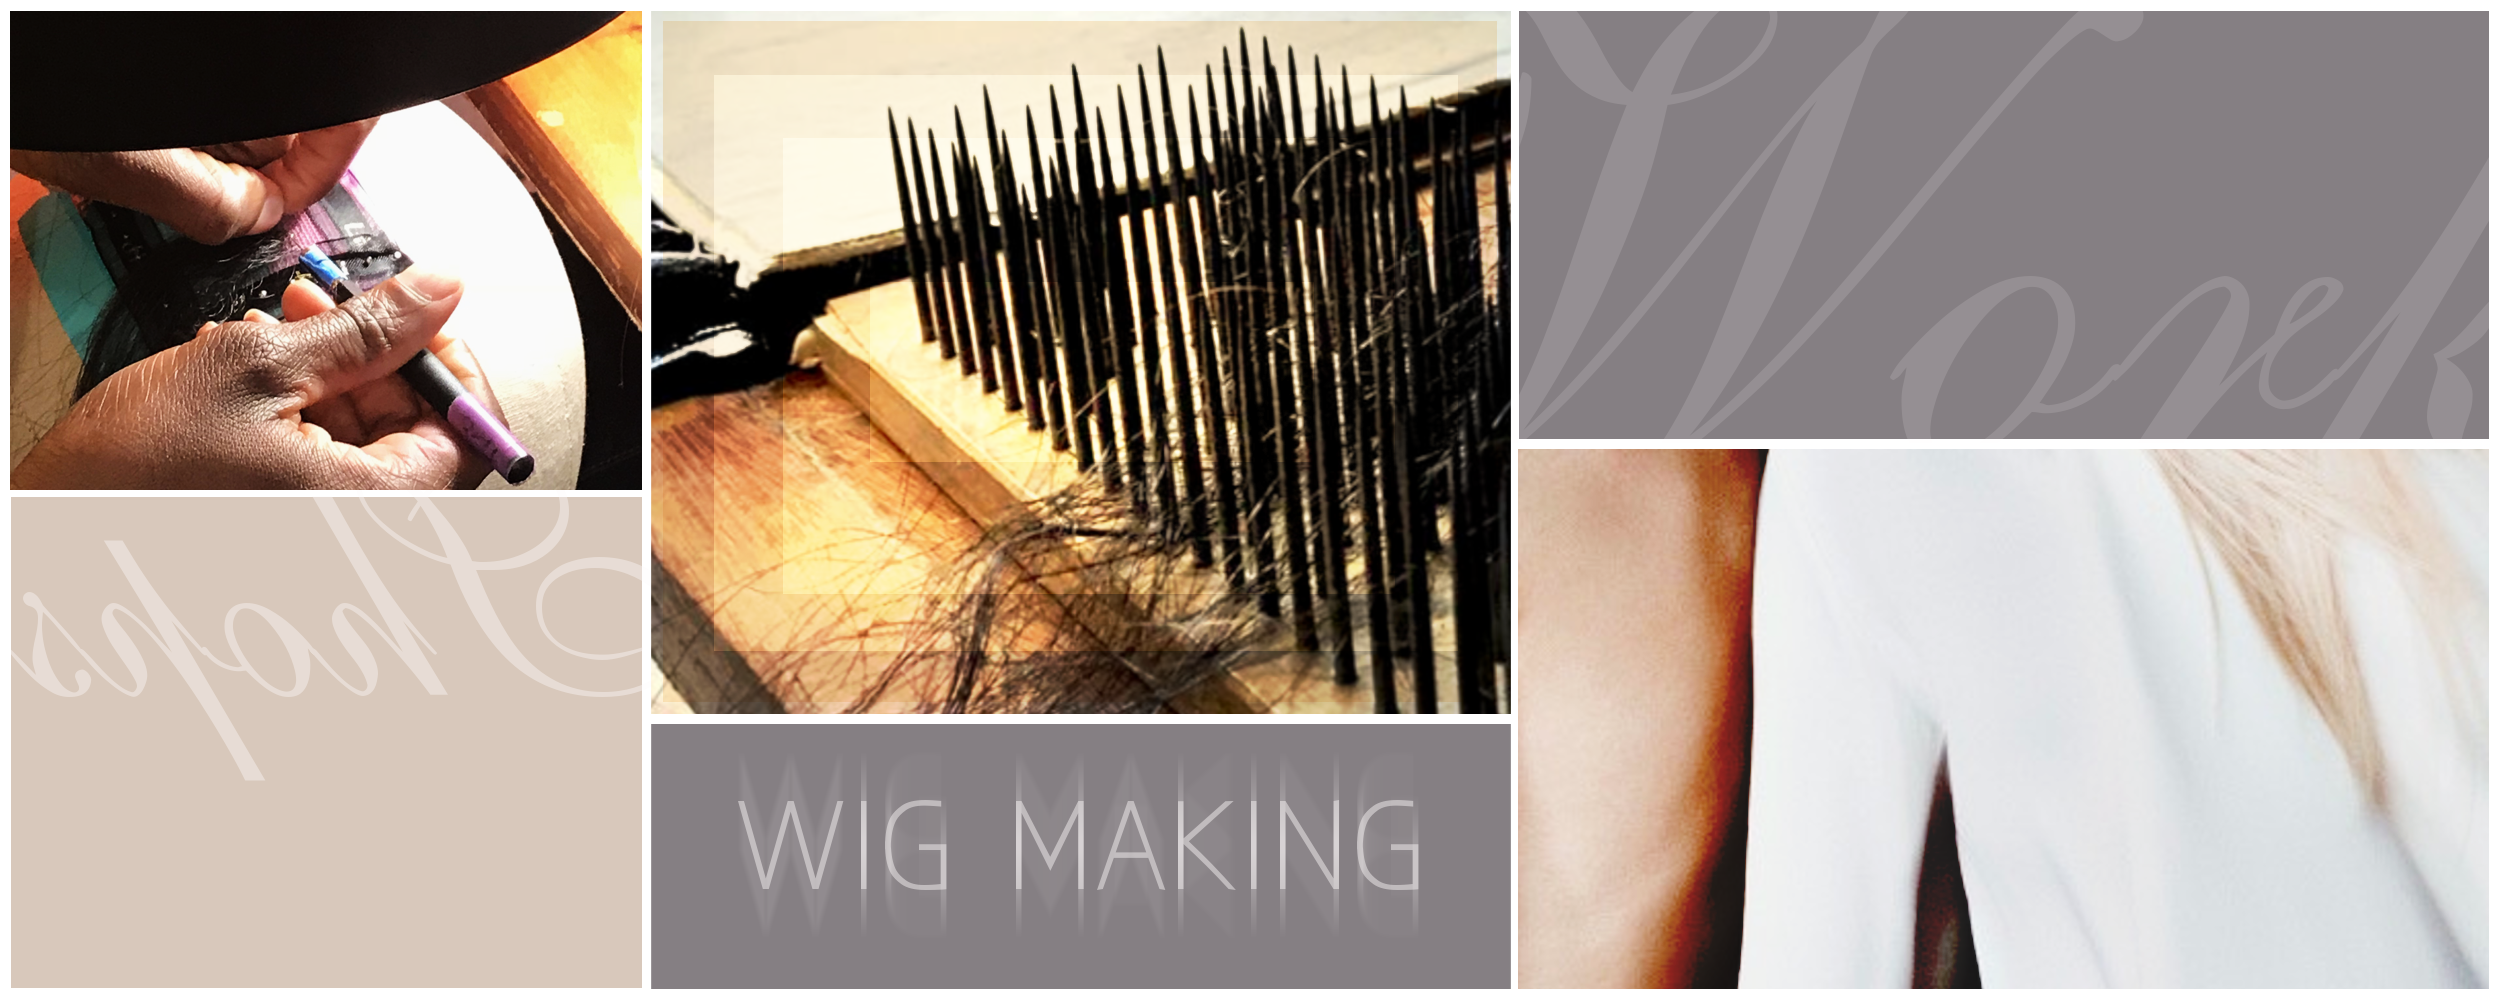 Wig Making Classes/ Workshops — LHP4Beauty Lhp Private one-on-one Salon,  Spa & Wig Making Workshops